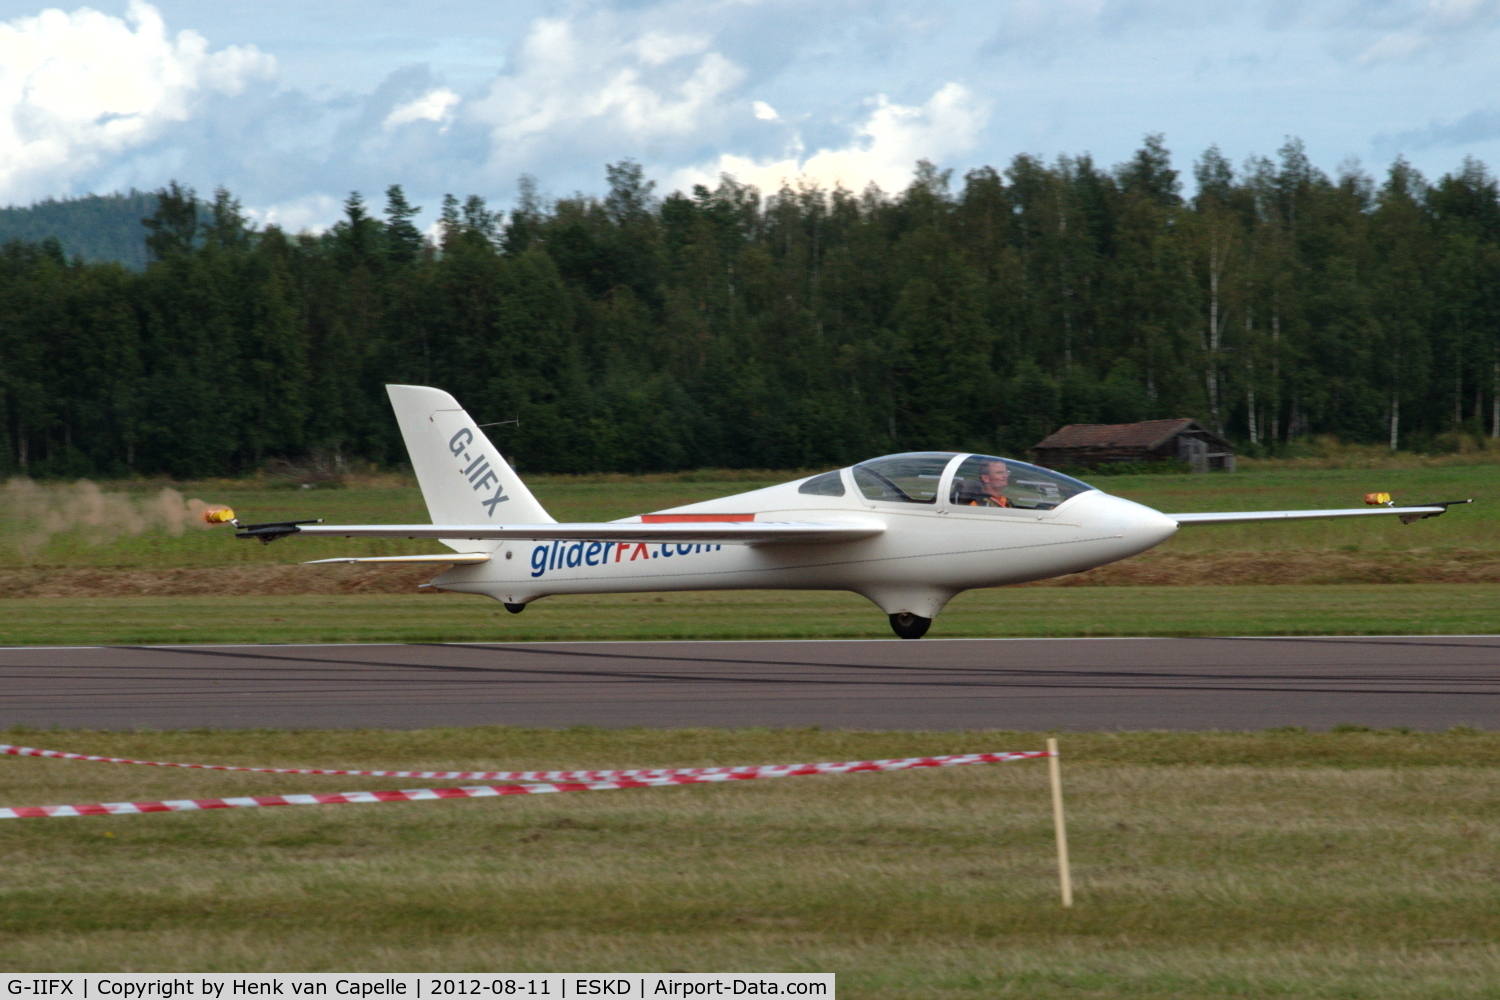 G-IIFX, 1998 Marganski MDM-1 Fox C/N 223, Guy Westgate landing his MDM-1 glider after a flight display at Dala-Järna airfield, Sweden,